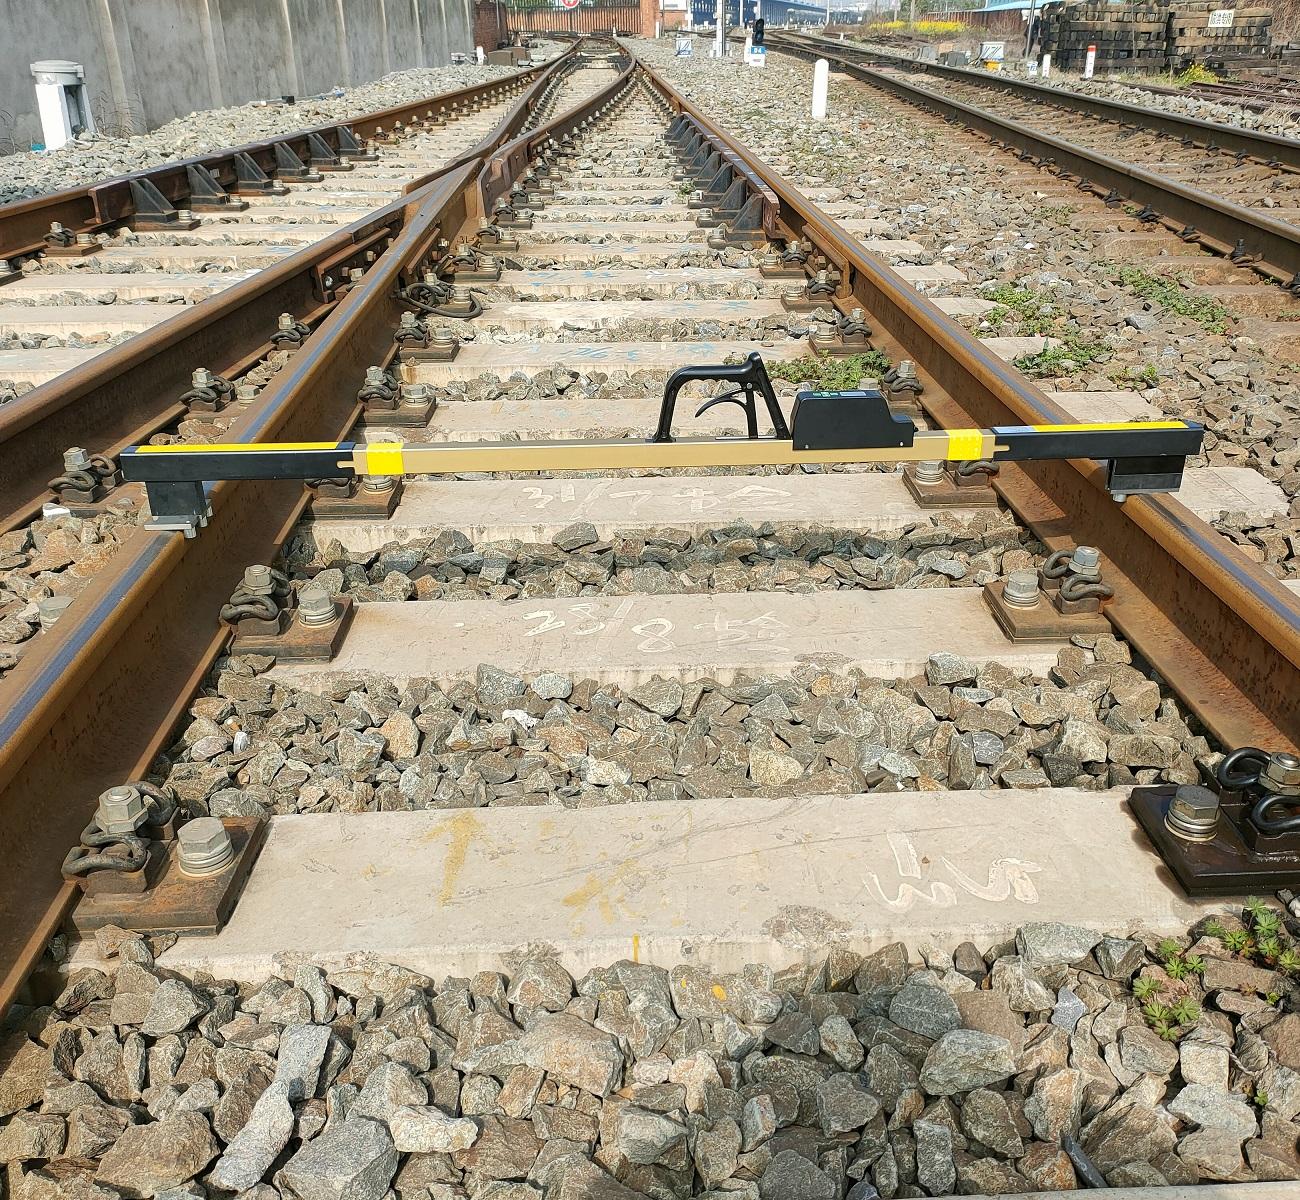 Digital Track Gauge Ruler Rail Measuring Tools